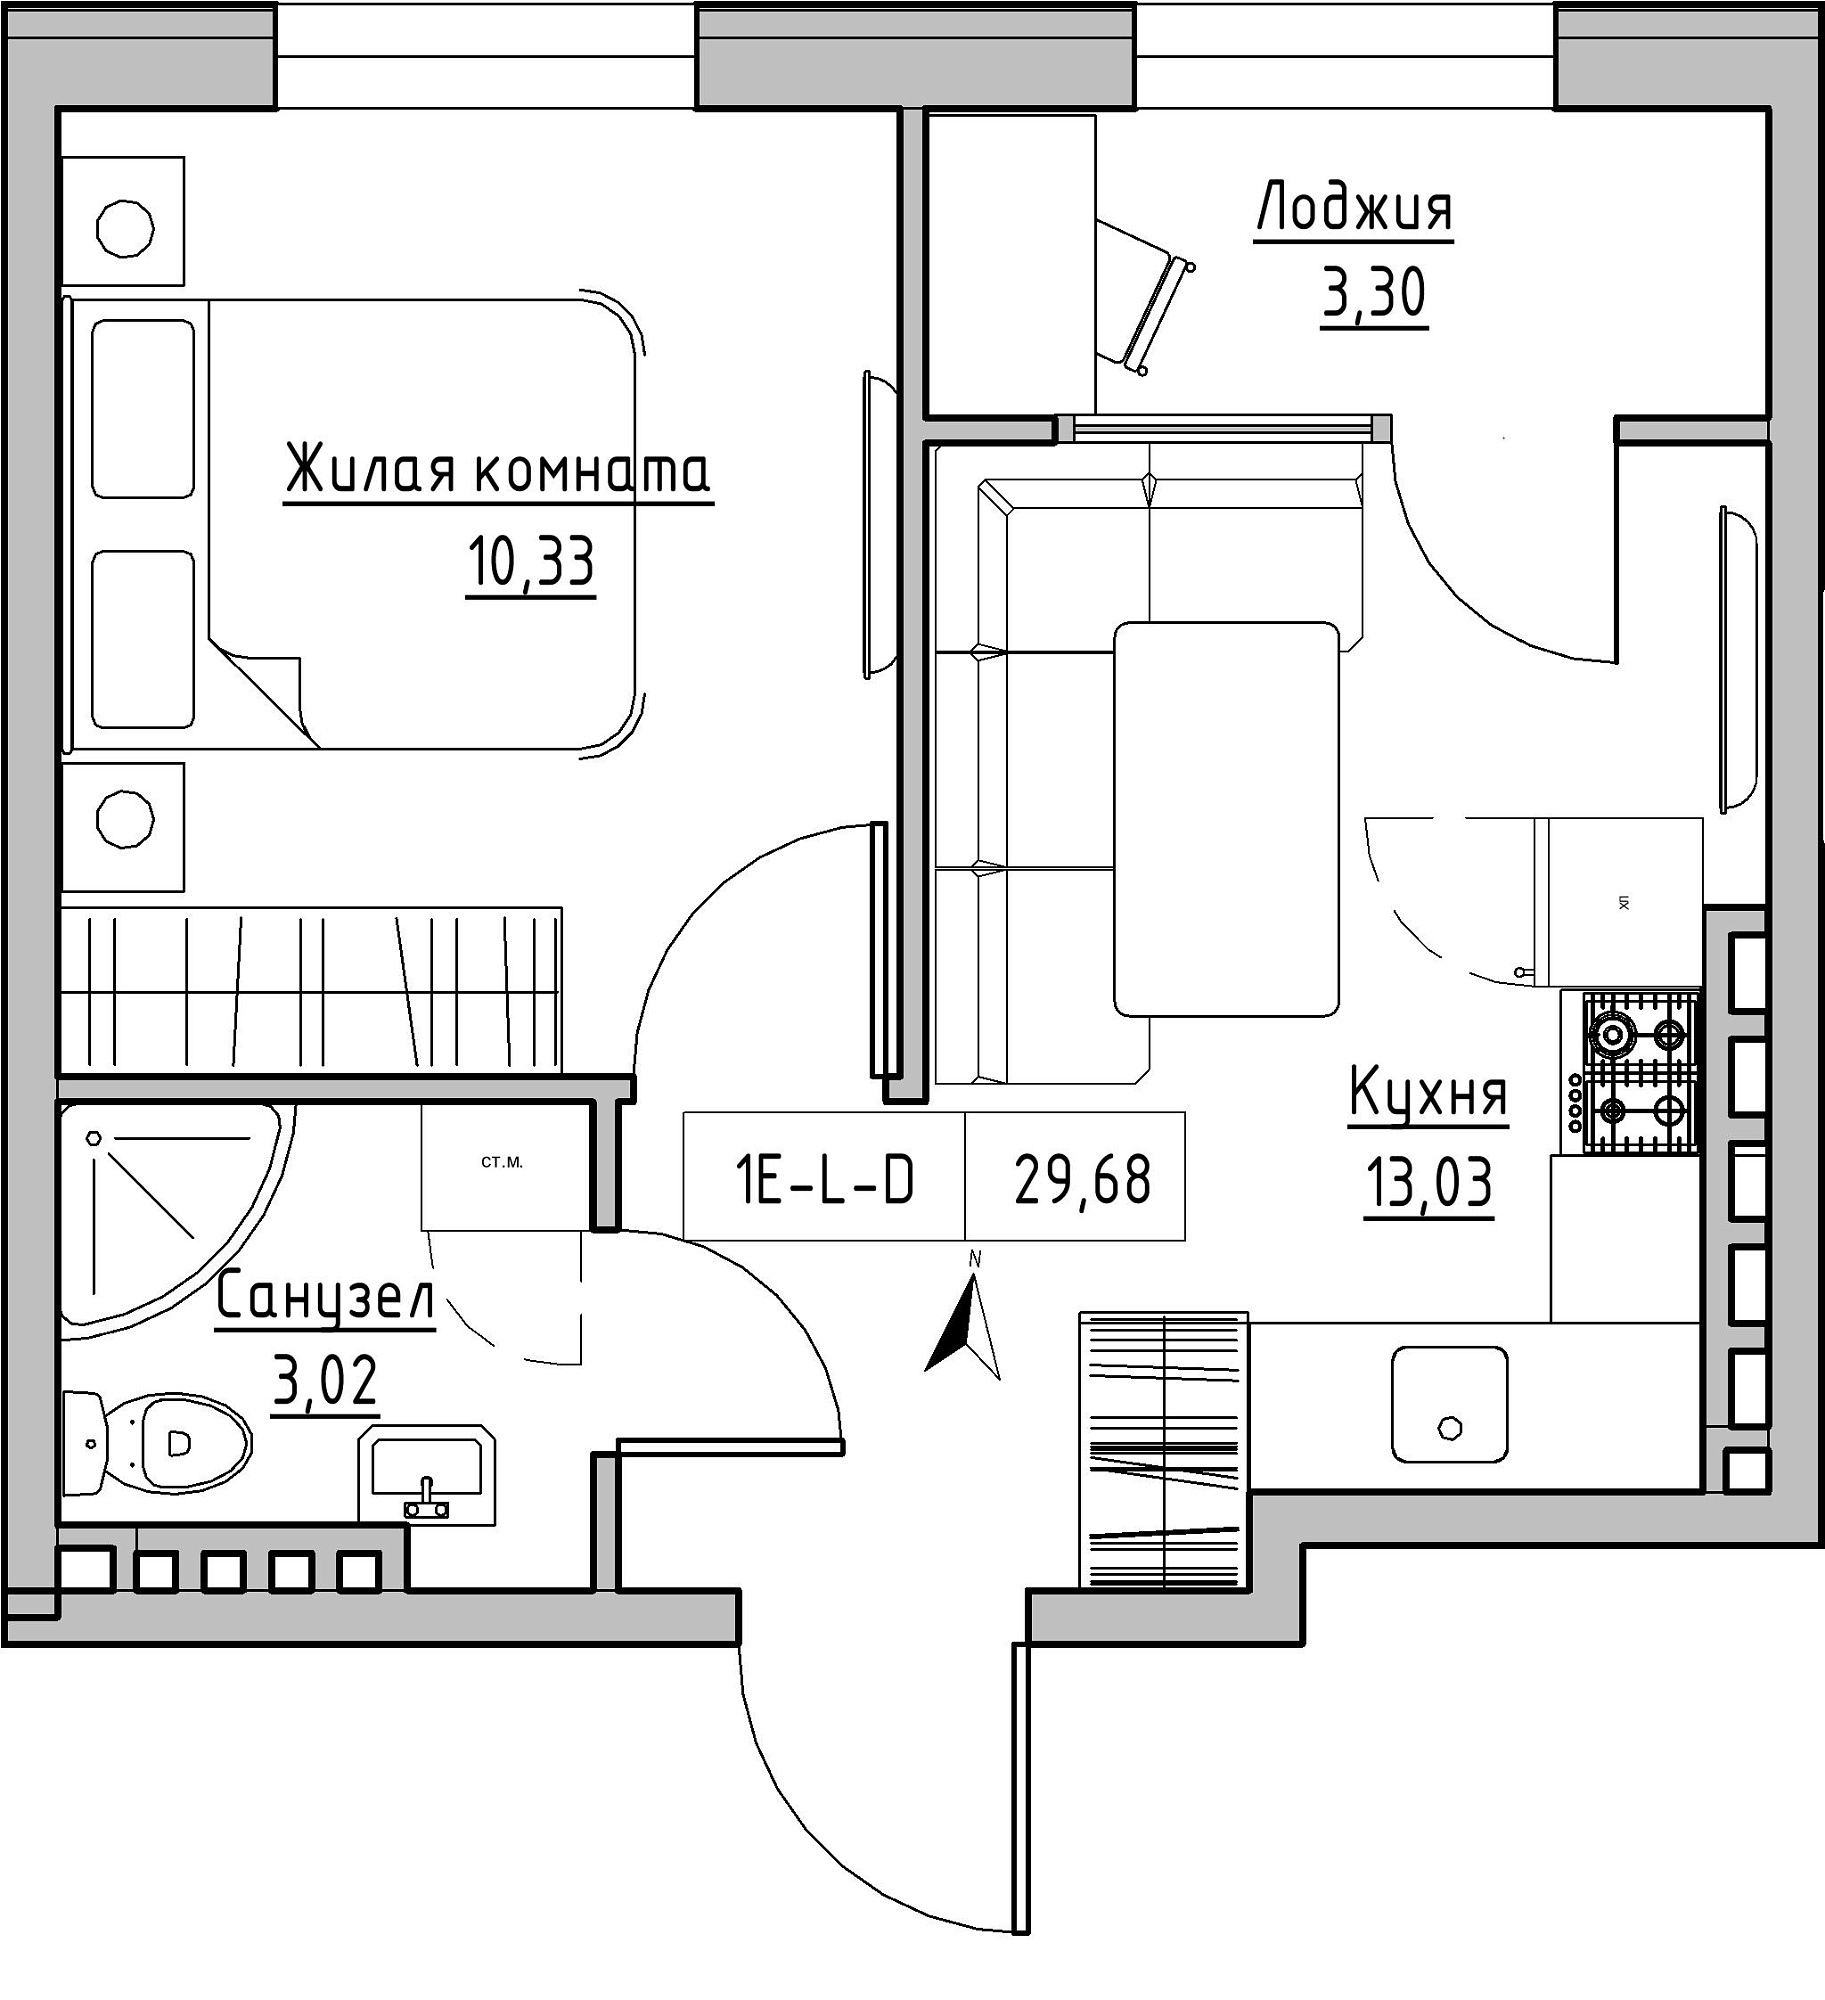 Planning 1-rm flats area 29.68m2, KS-024-05/0001.